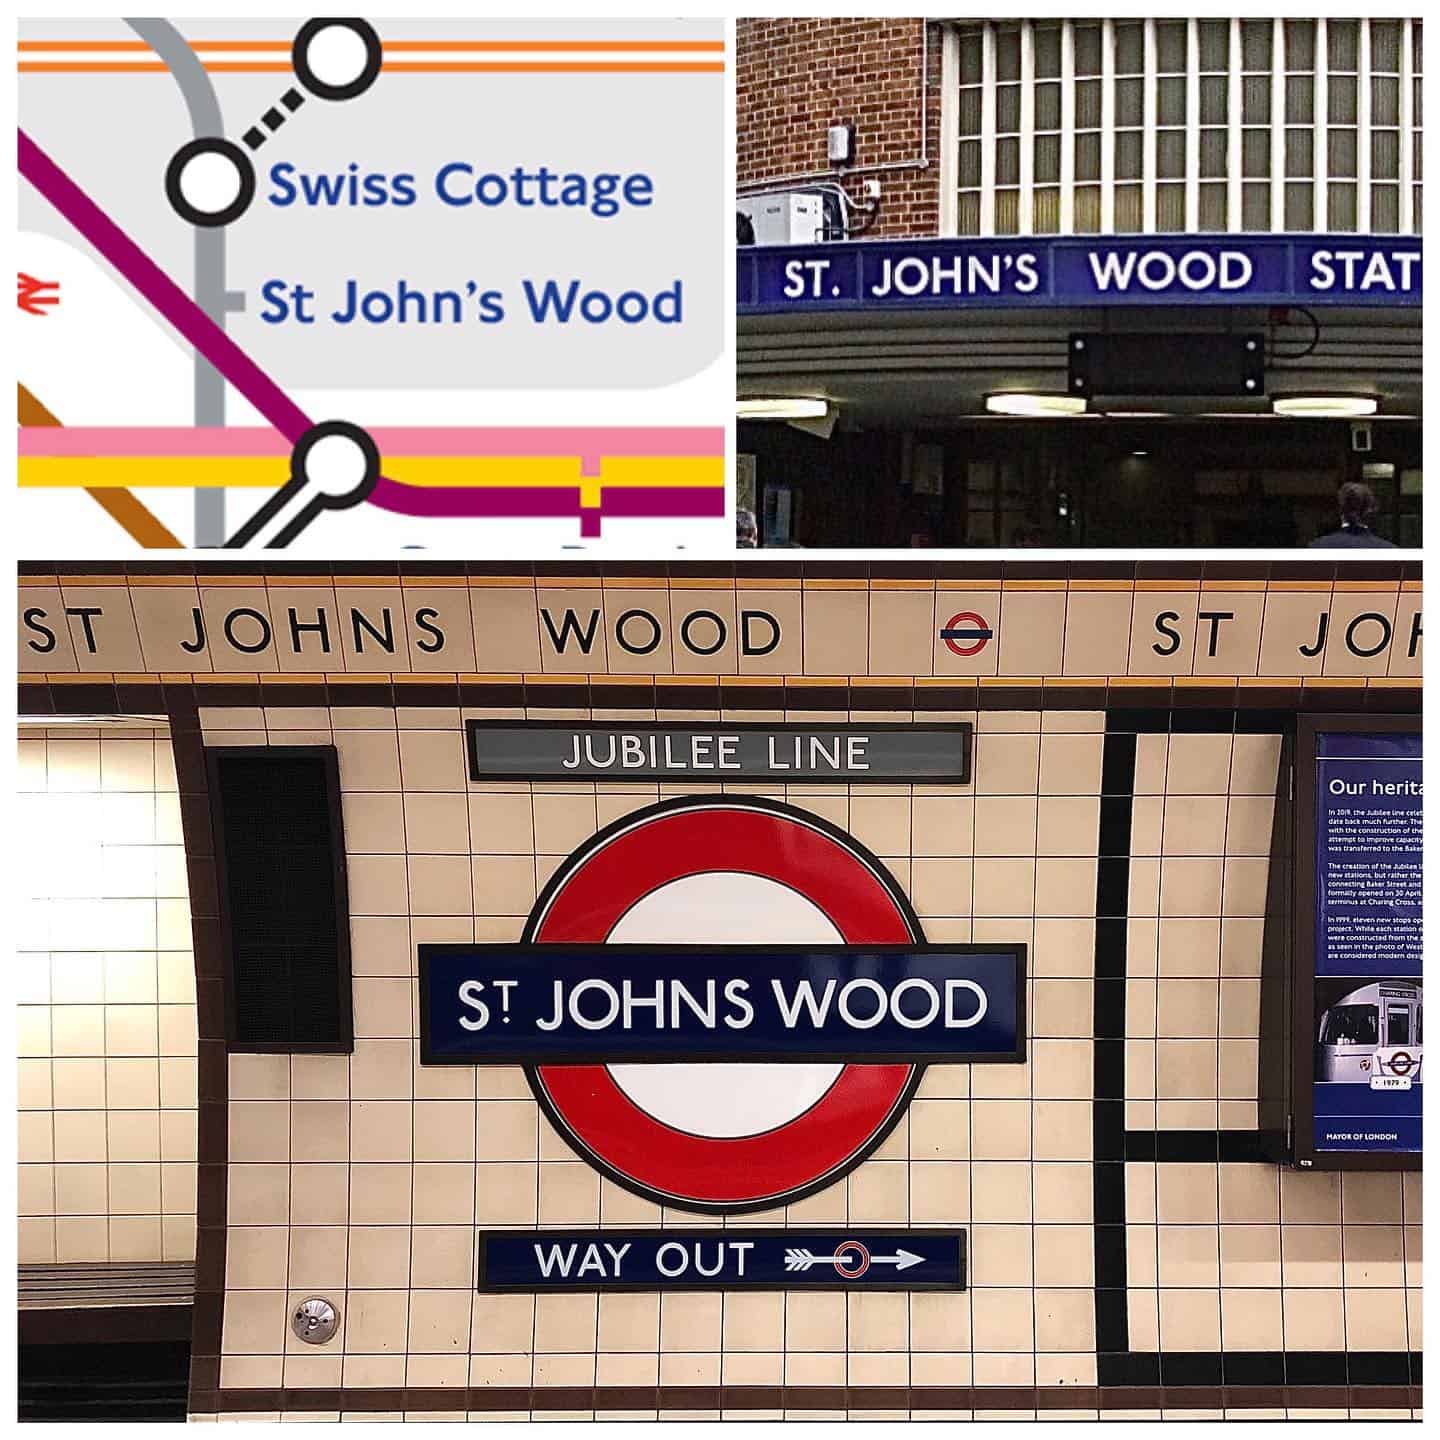 St. Johns Wood tube station